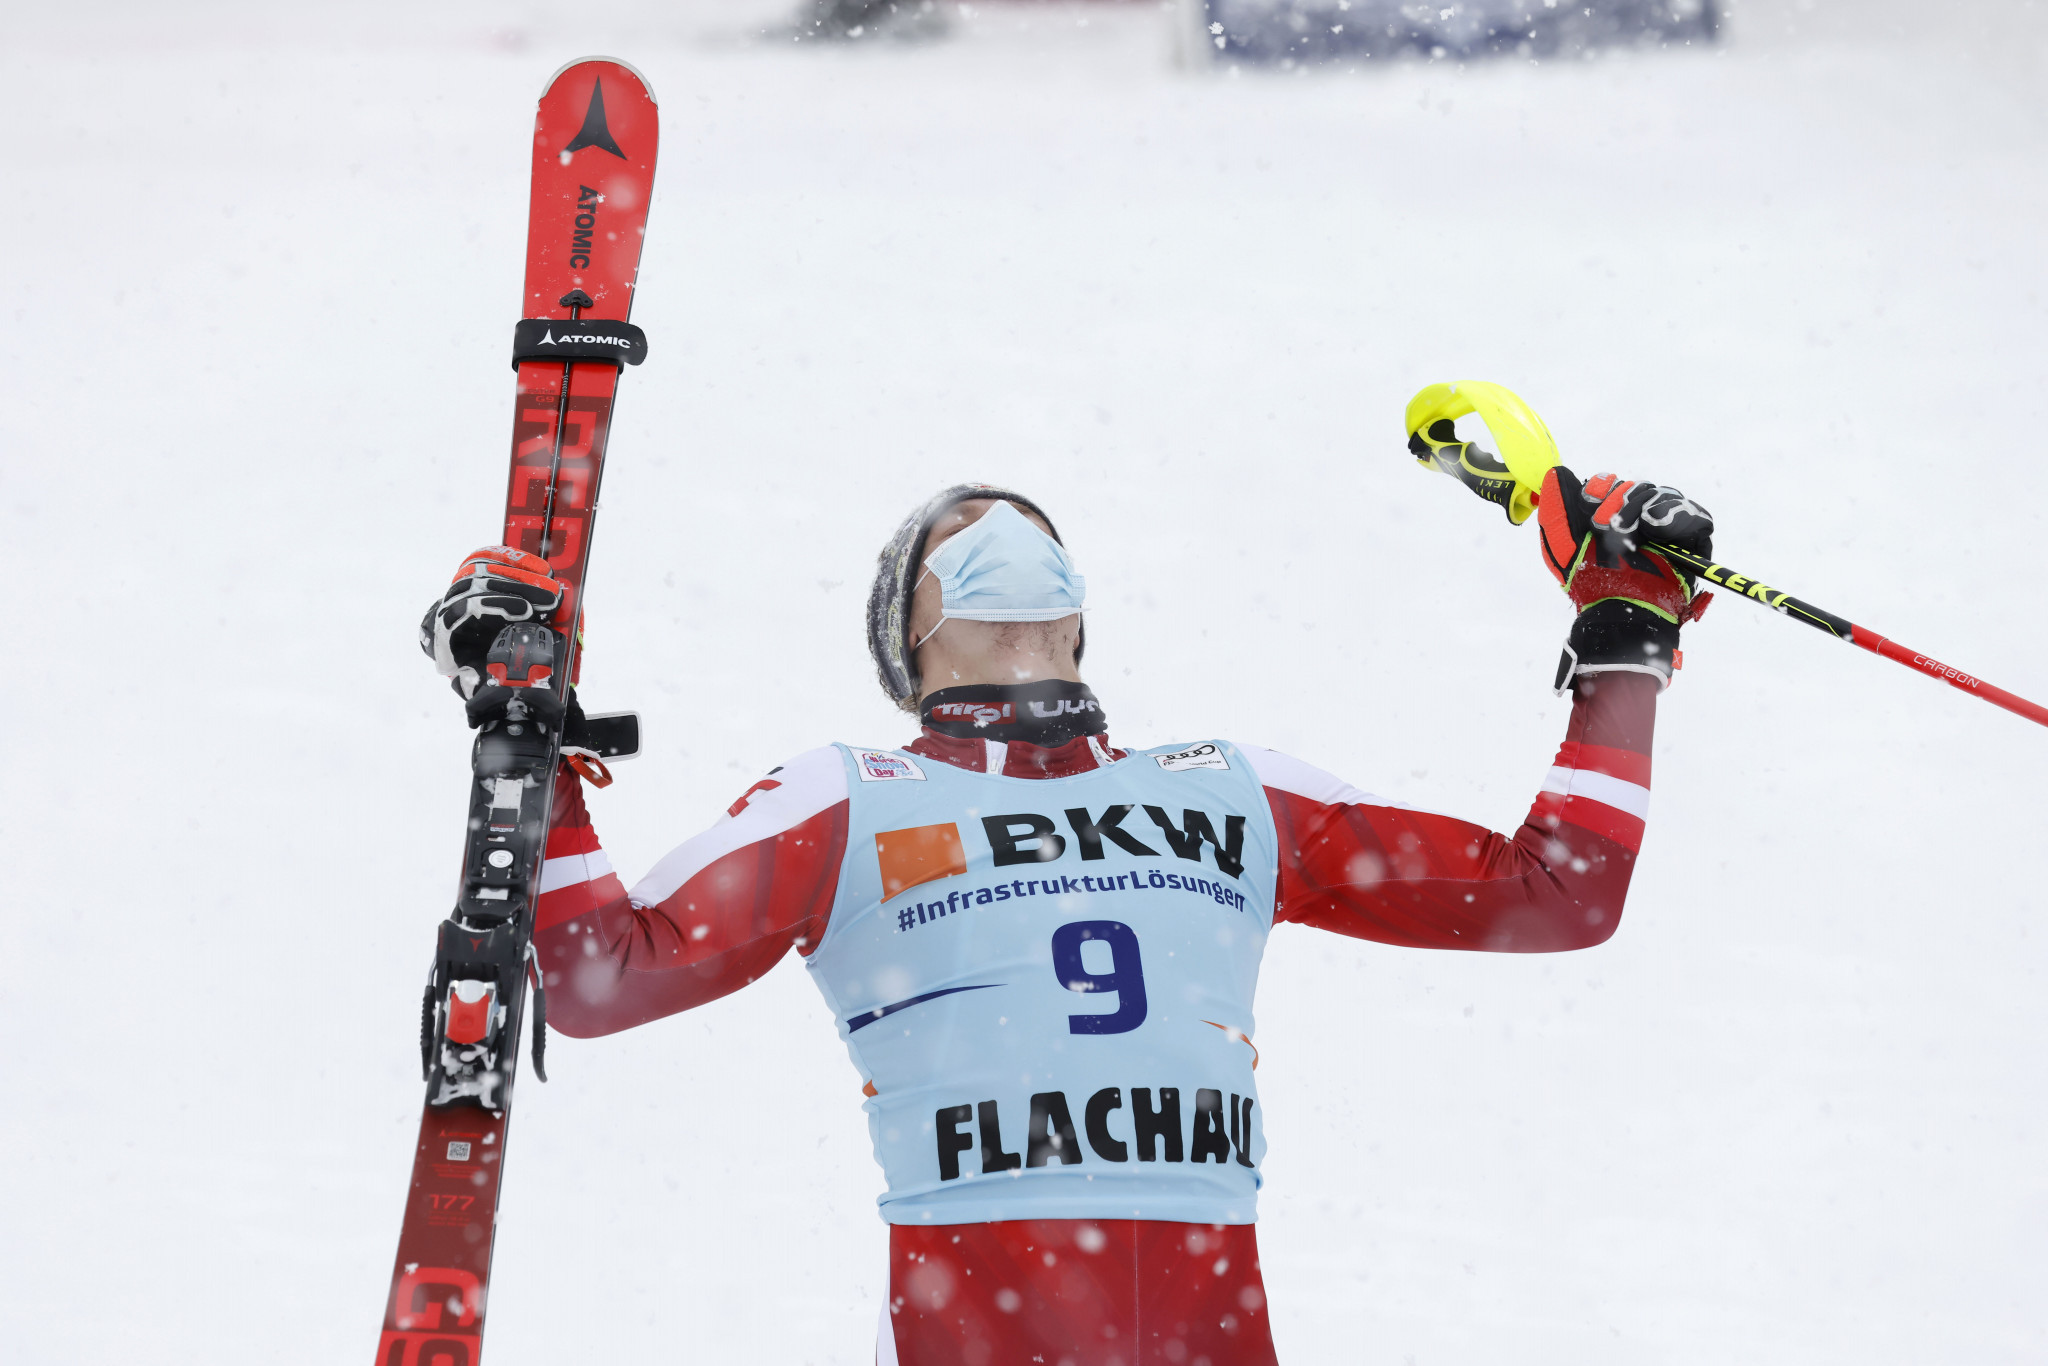 Feller revels in "miracle" first FIS Alpine Ski World Cup win in Flachau